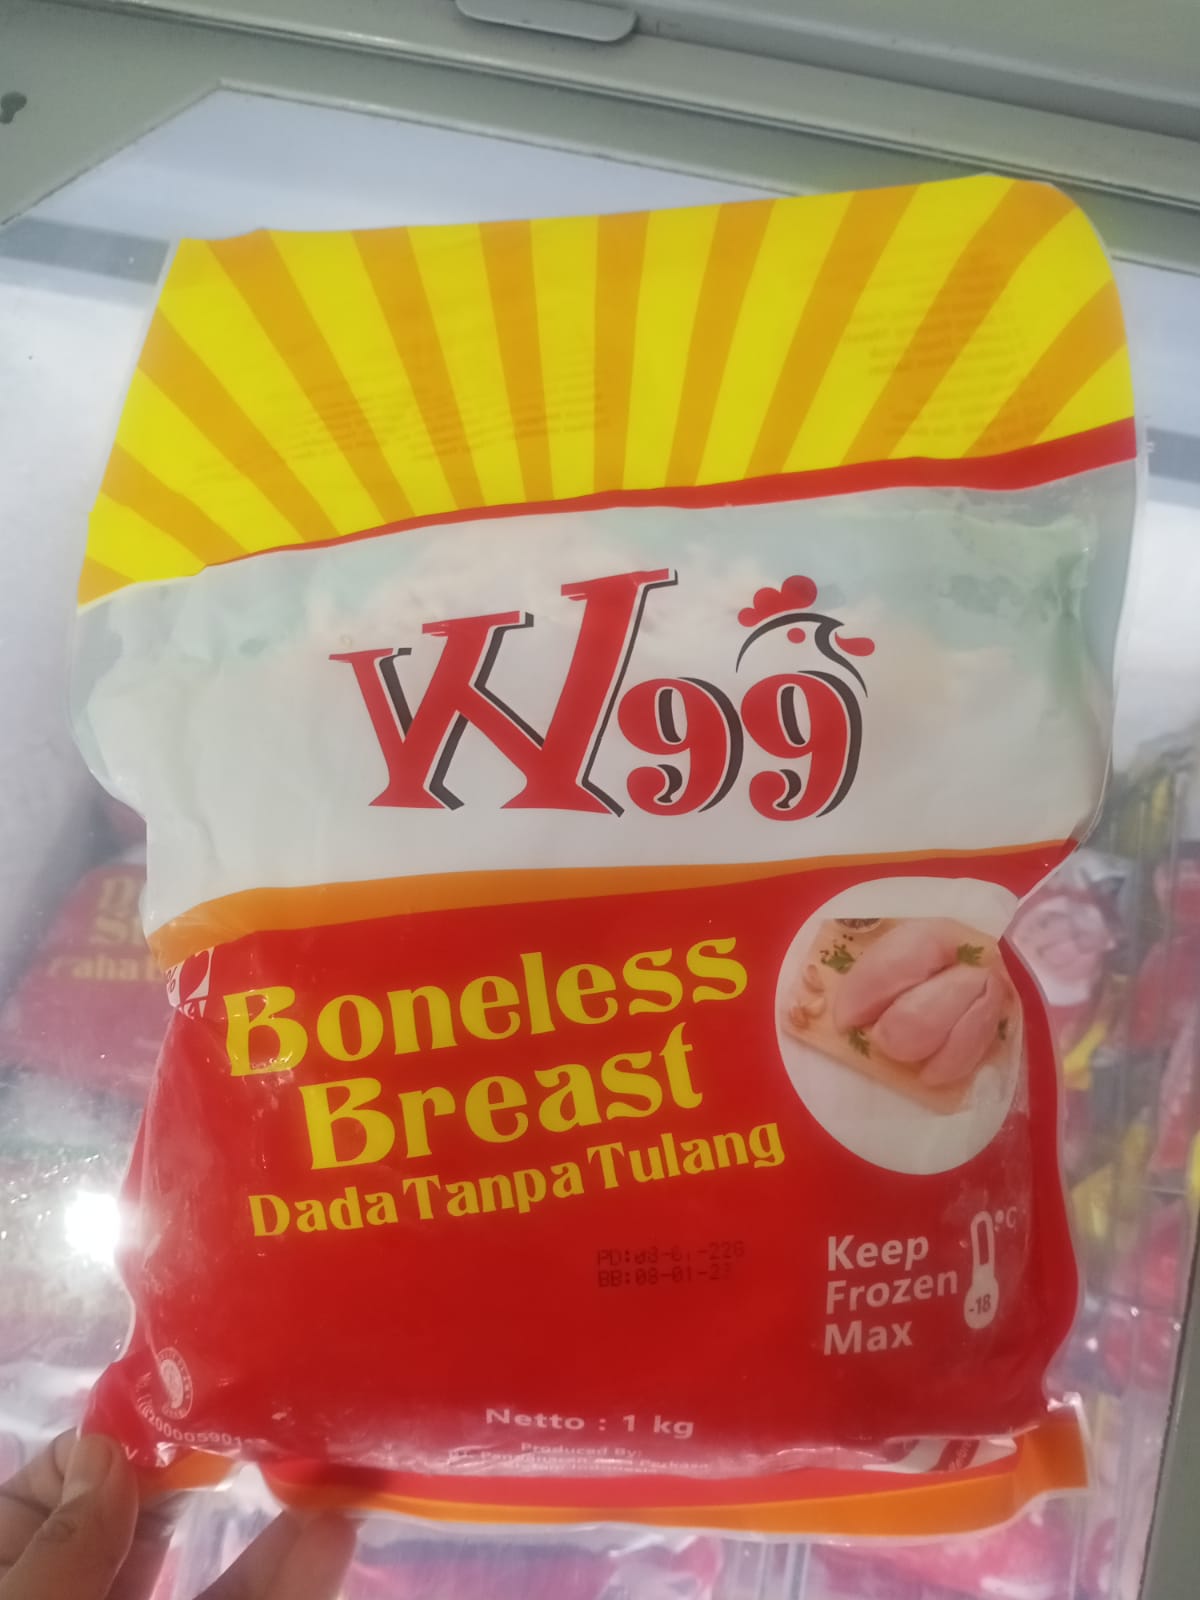 W99 Boneless Breast(dada tanpa tulang) 1kg